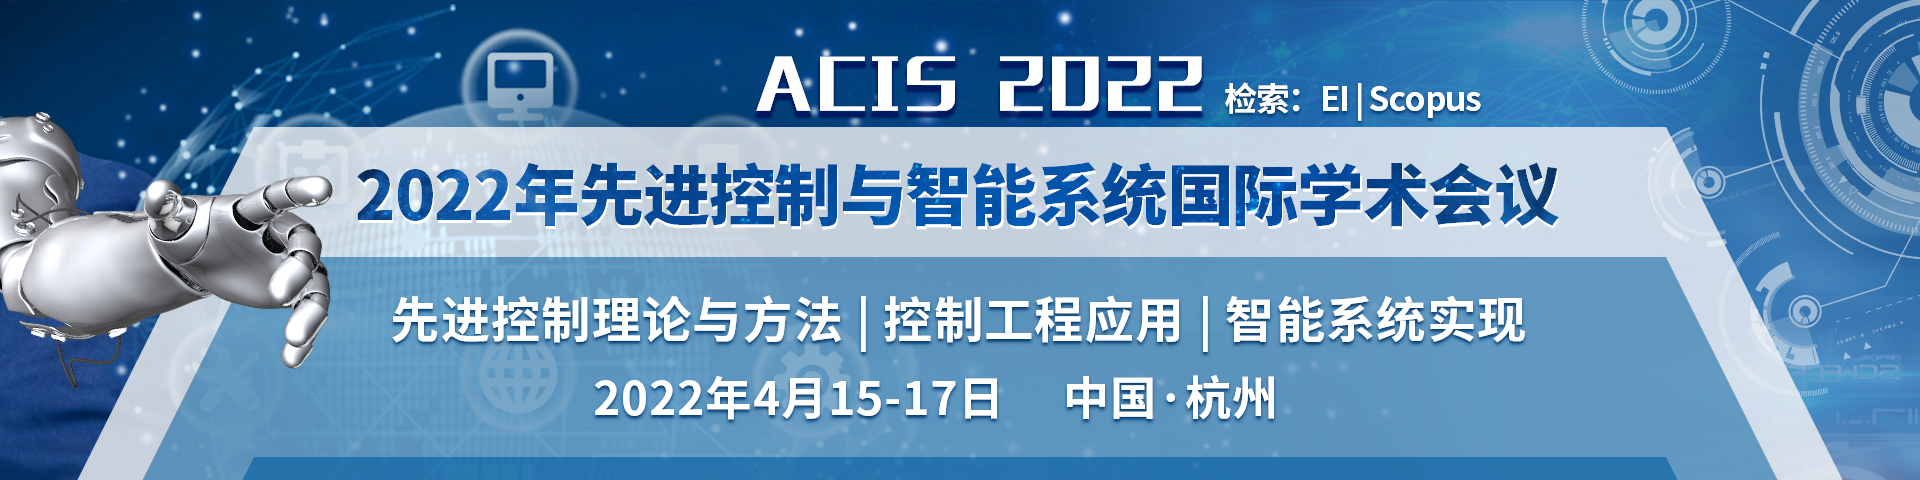 4月杭州-ACIS2022-艾思平台banner-林倩瑜-20210908.jpg